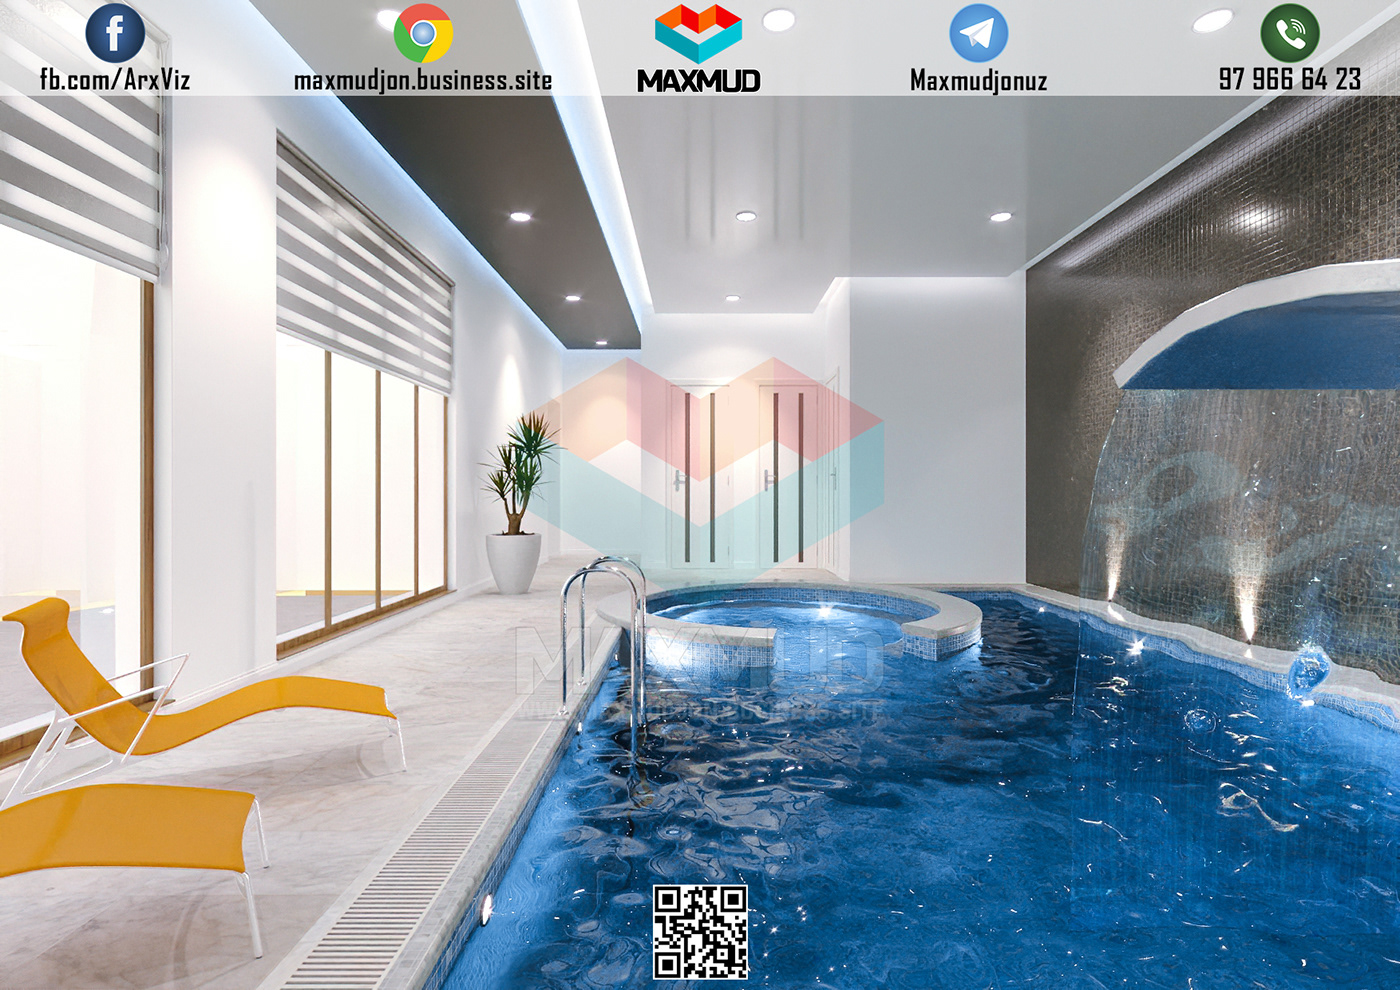 Penthouse,
Swimming pool,
interior visualization,